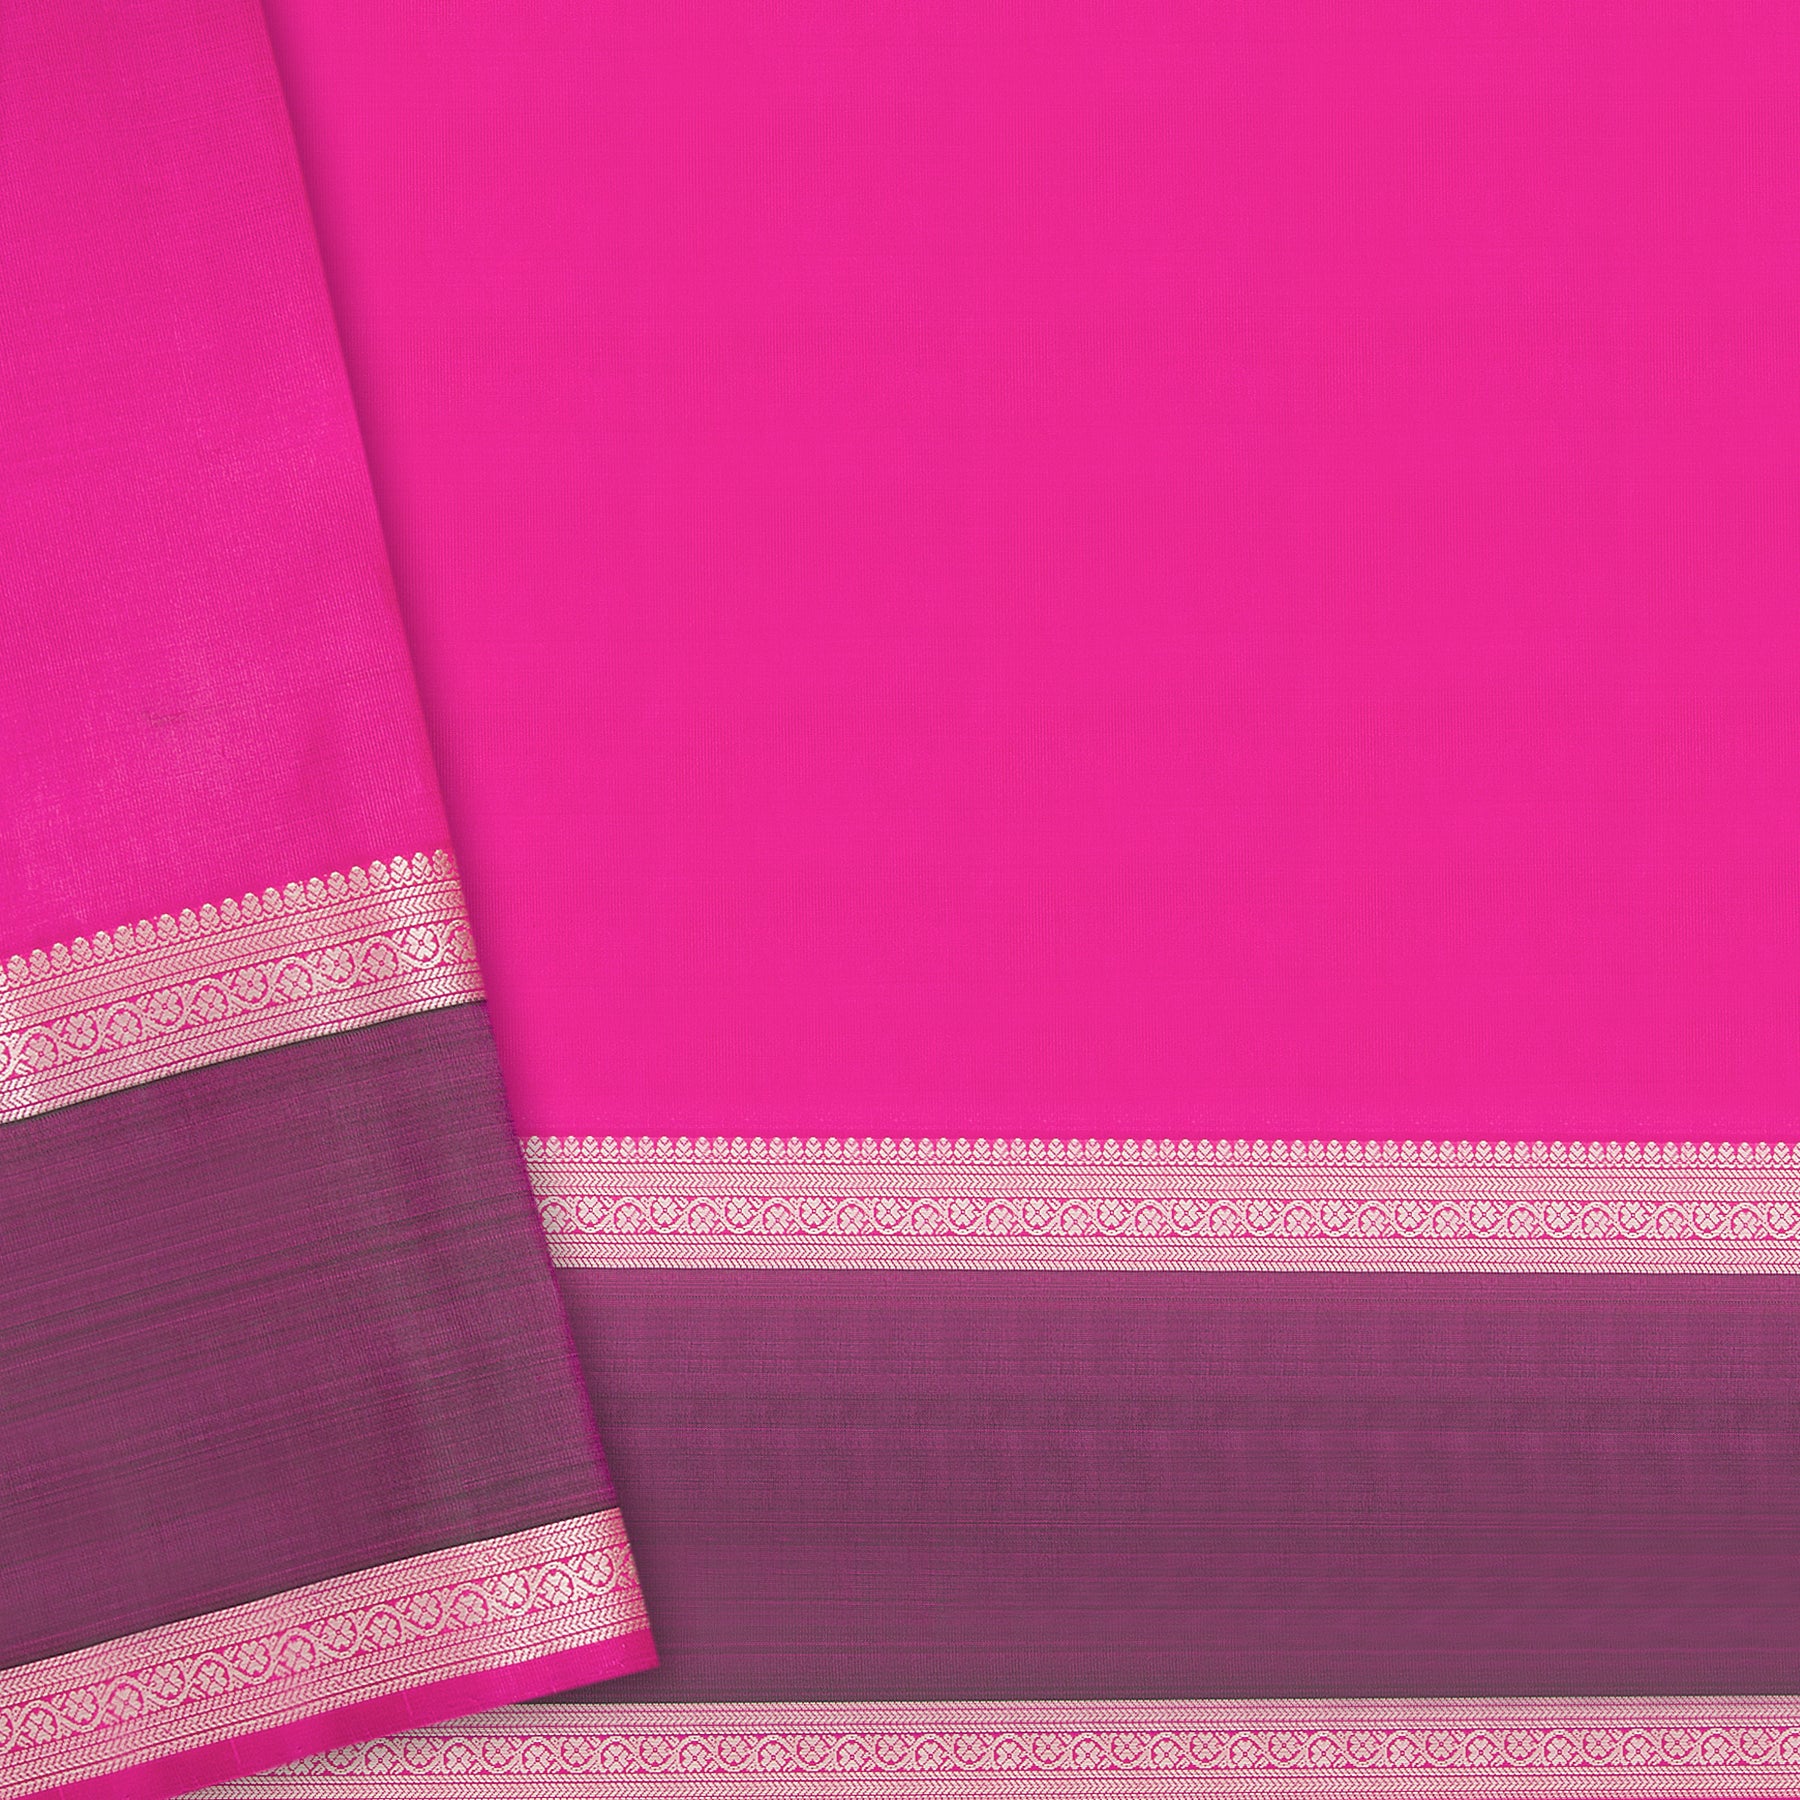 Kanakavalli Kanjivaram Silk Sari 23-599-HS001-04095 - Blouse View